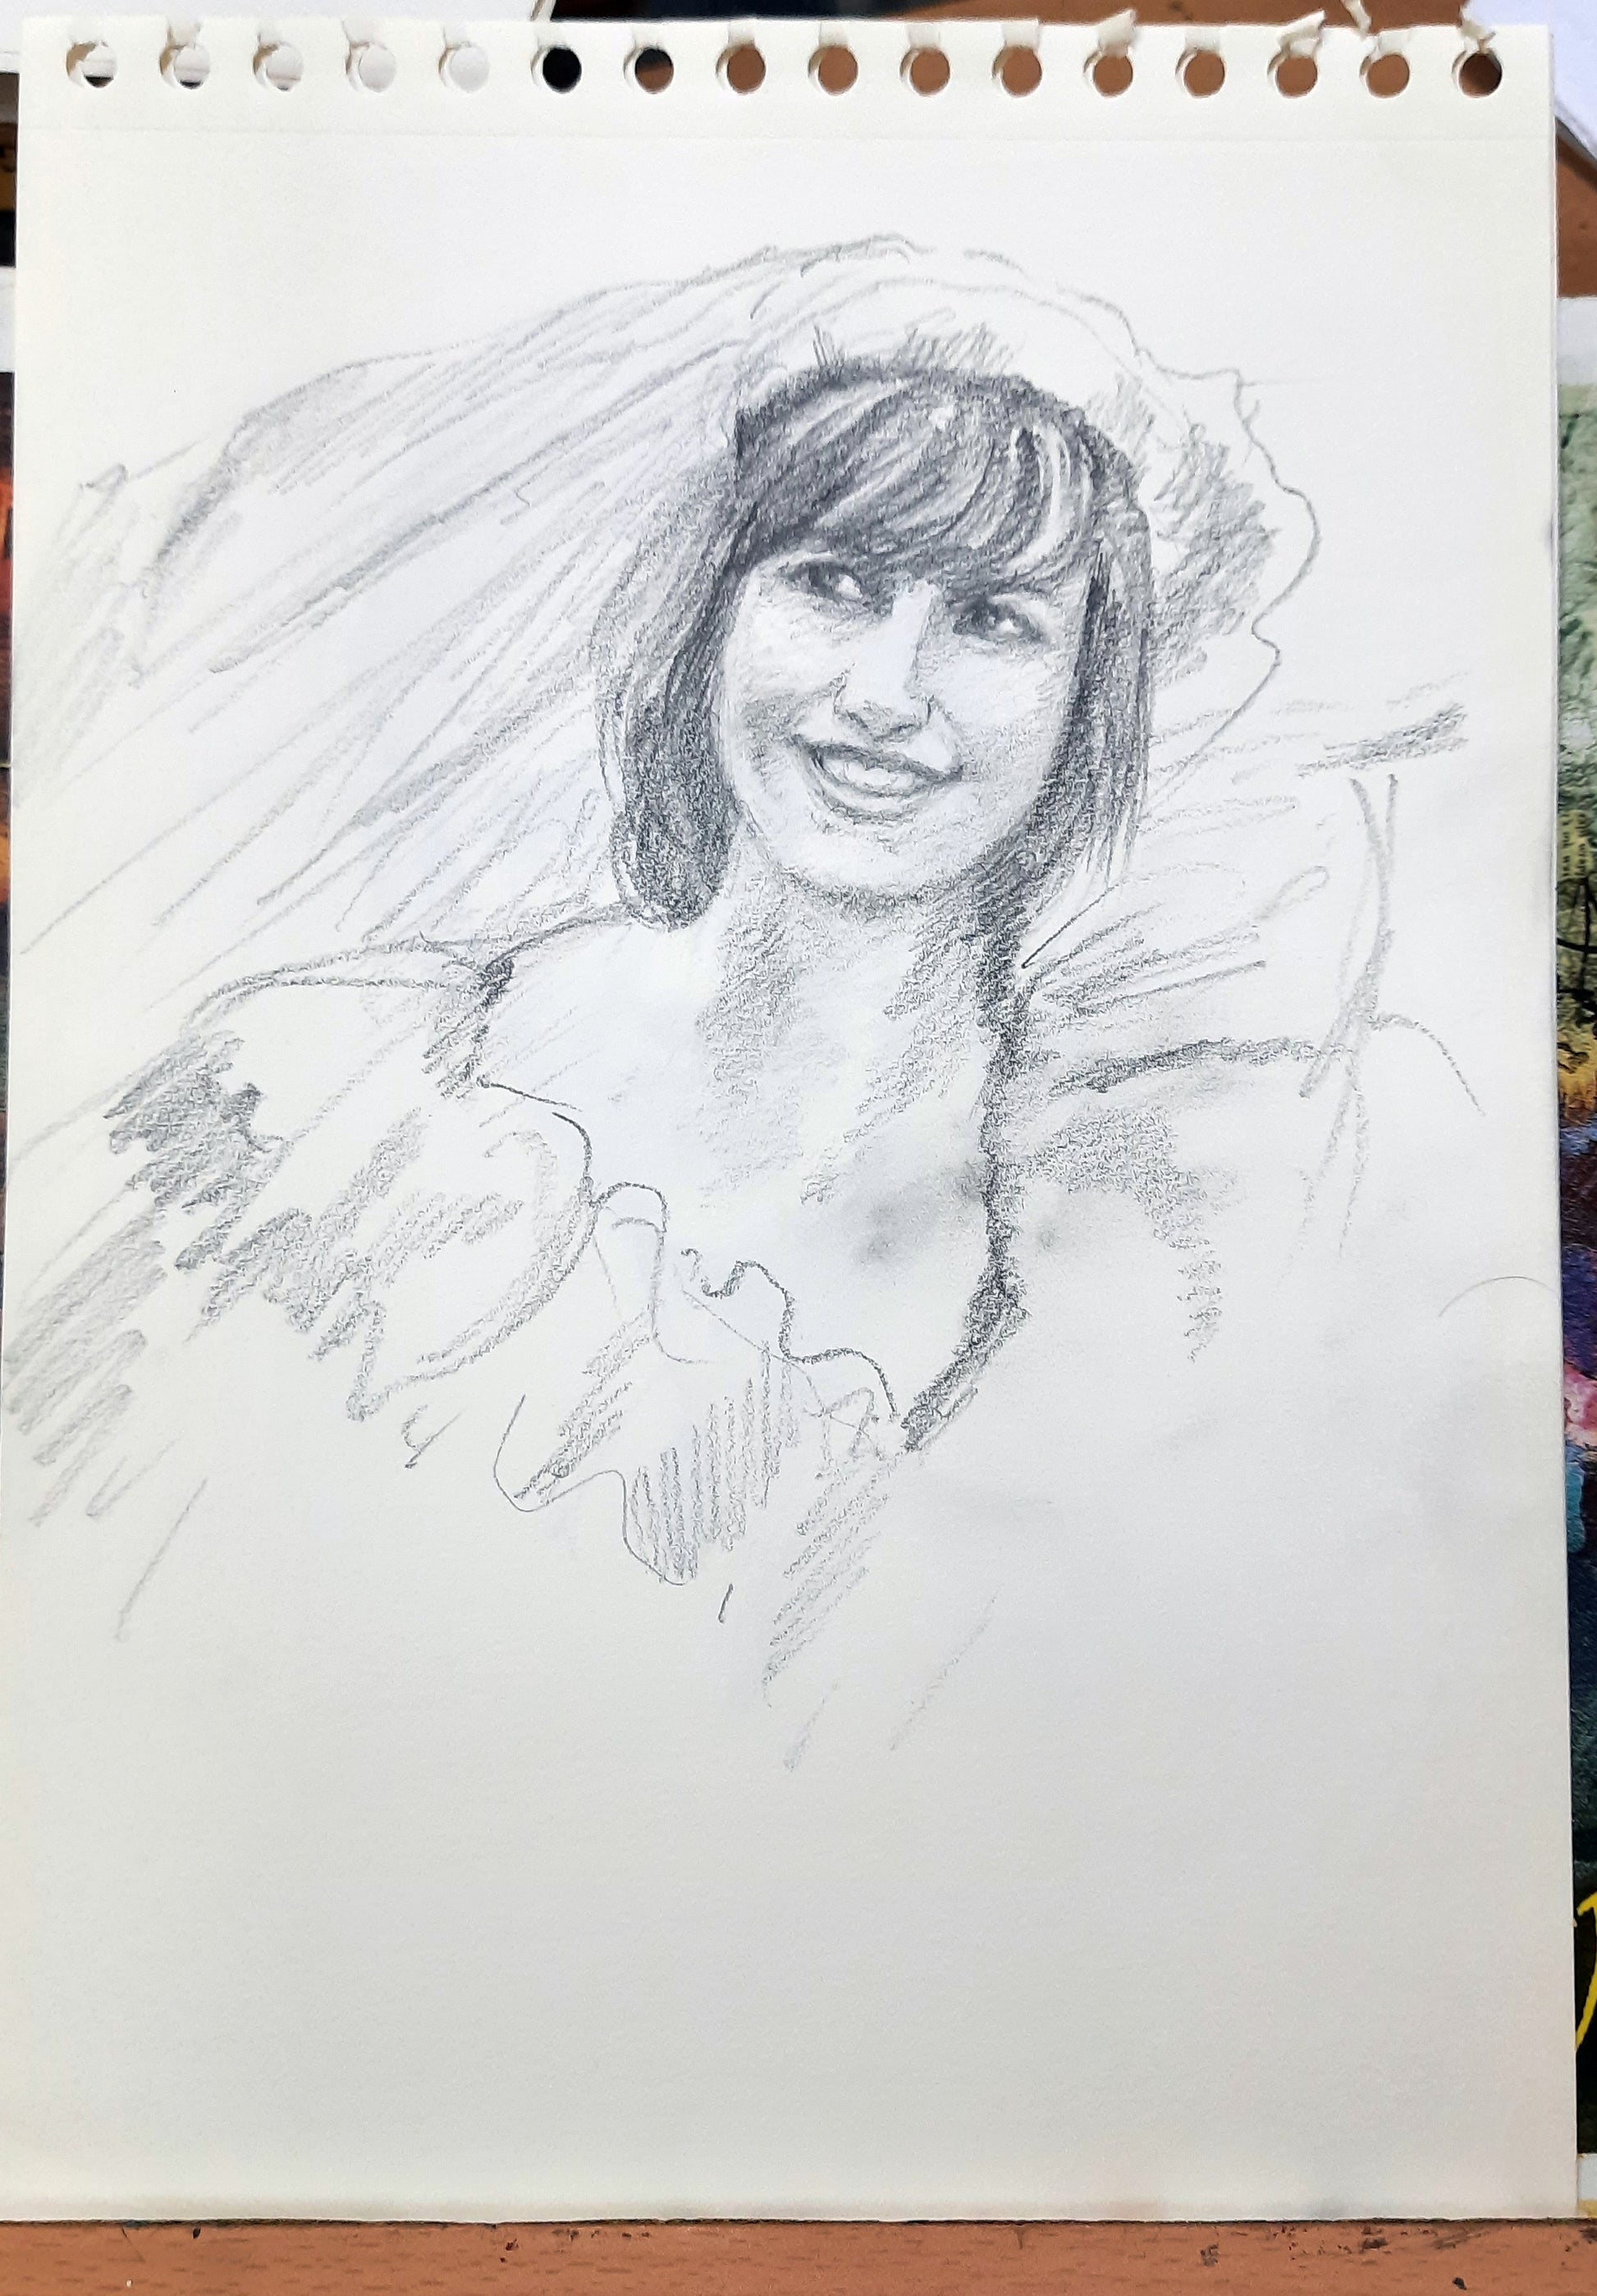 Studio work in progress, Happy bride, pencil sketch on paper